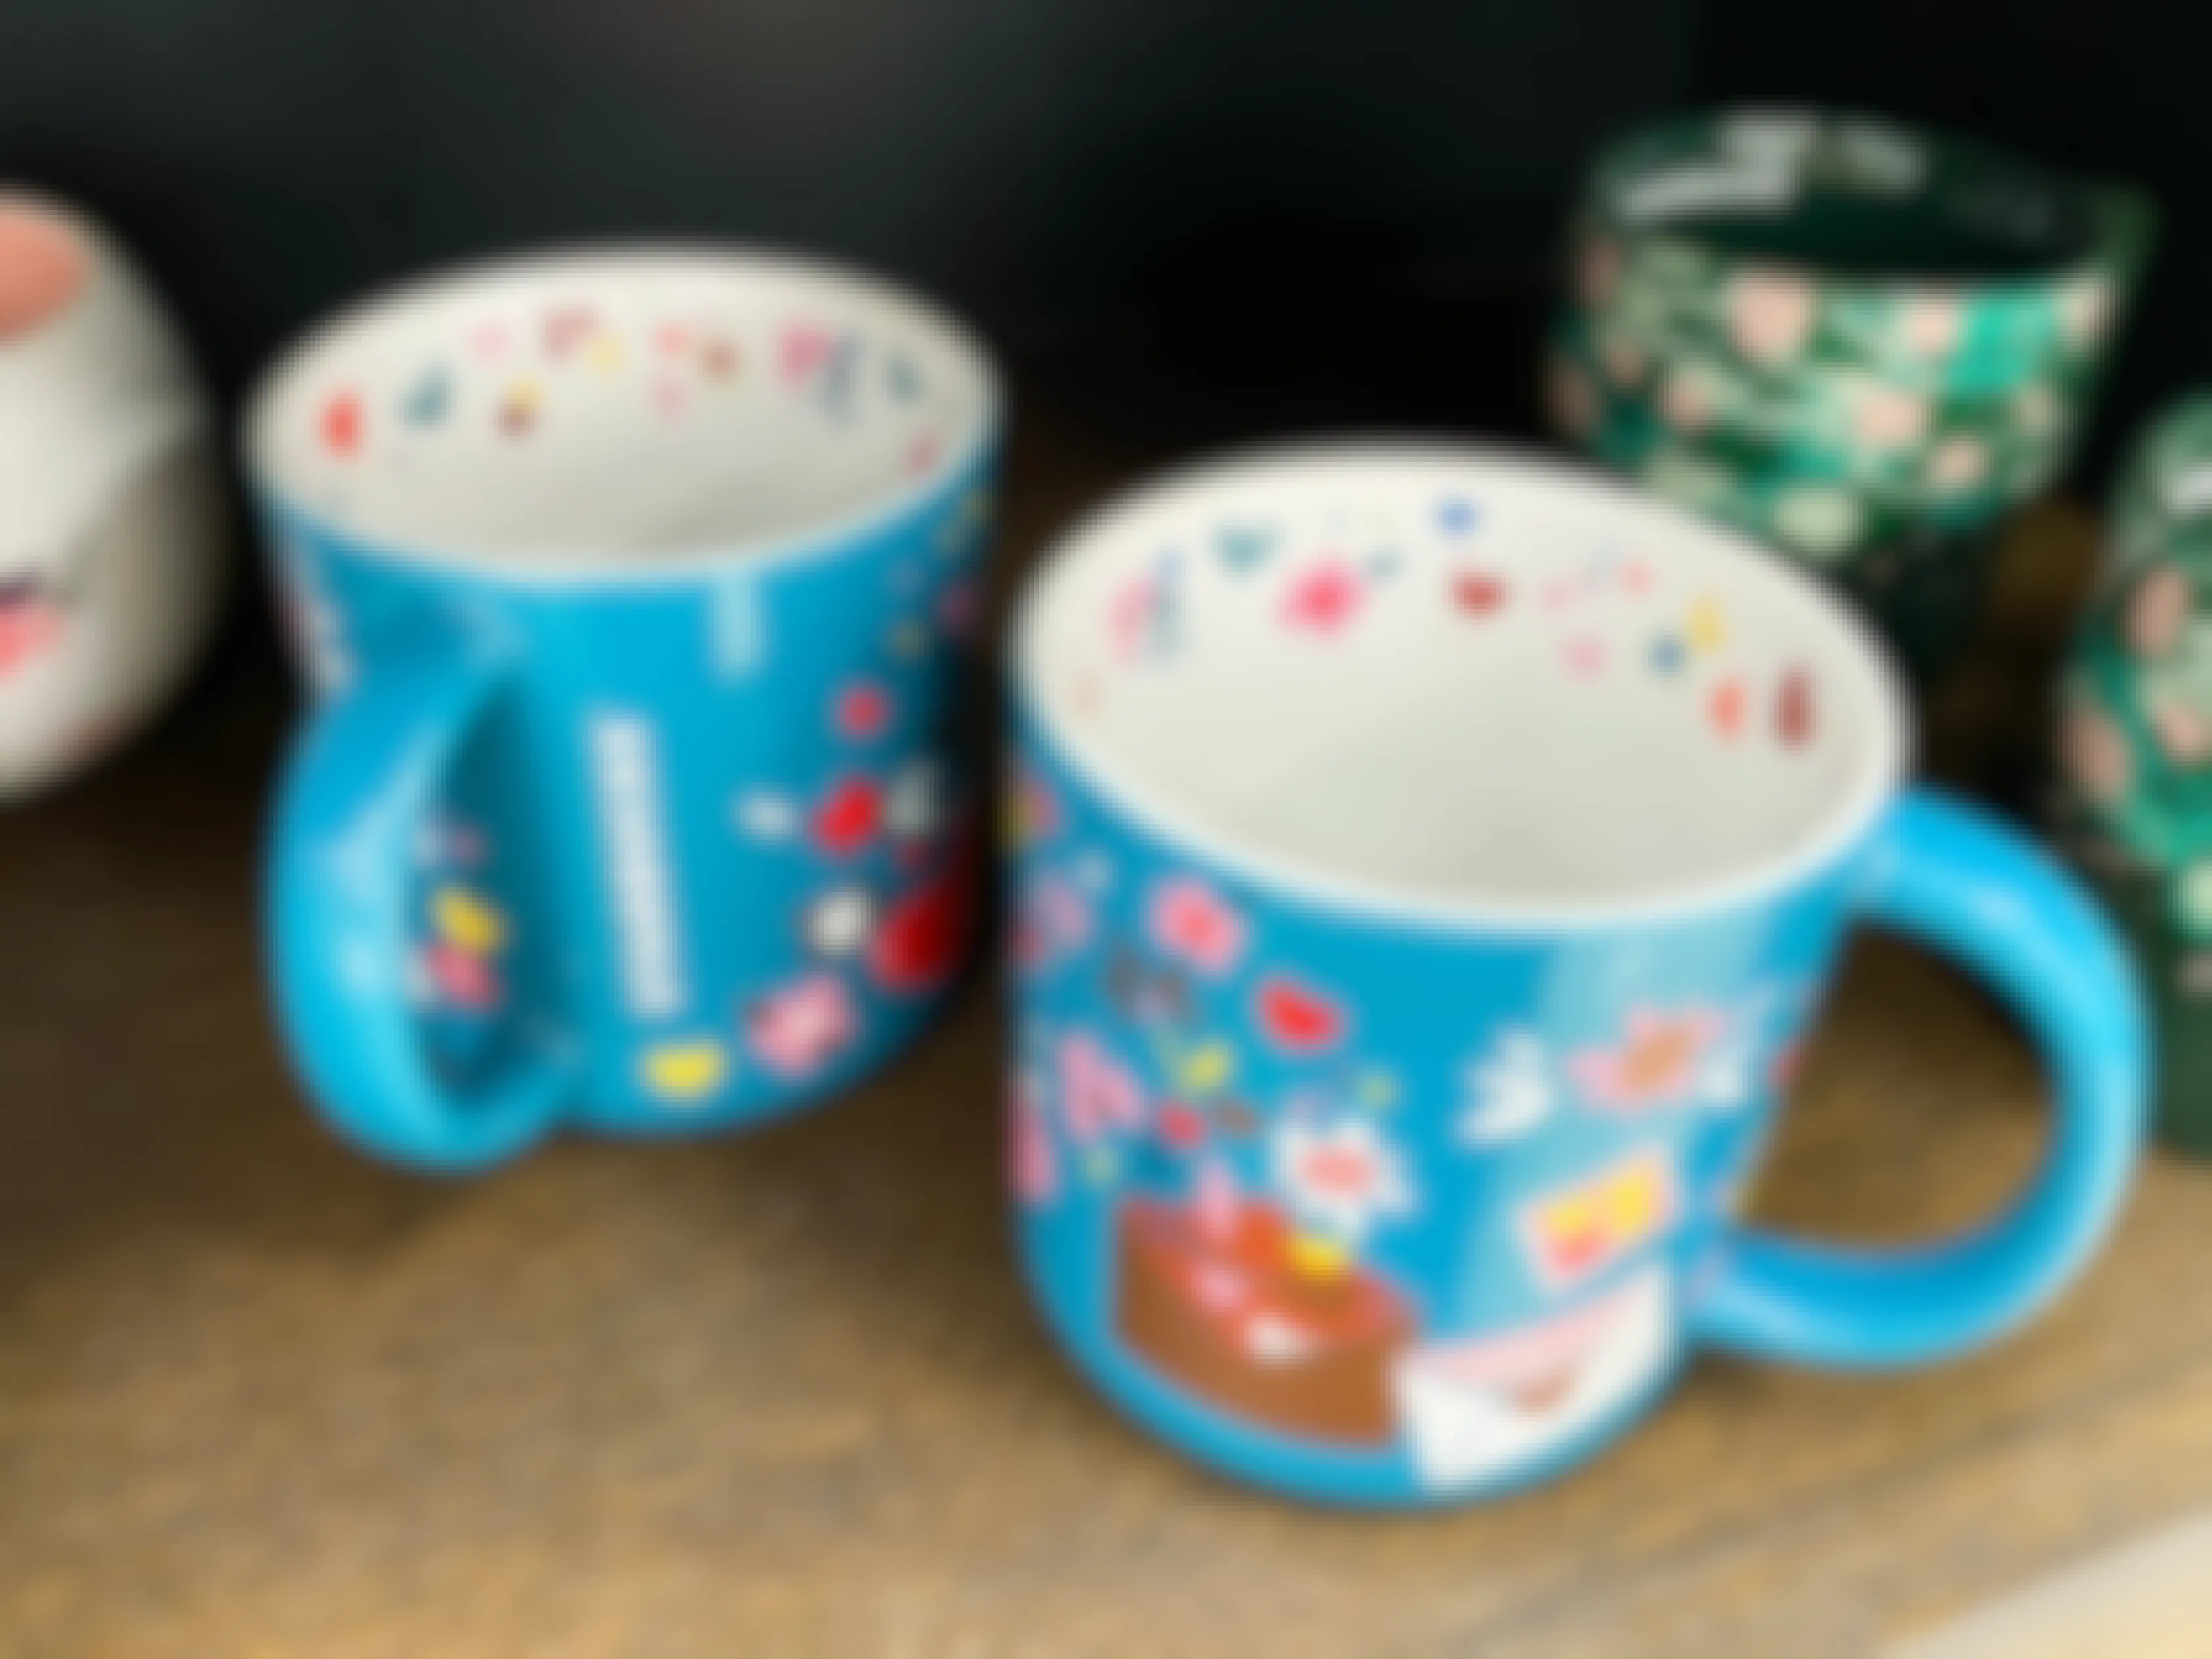 starbucks valentines day cup blue ceramic confetti 14 ounce mugs